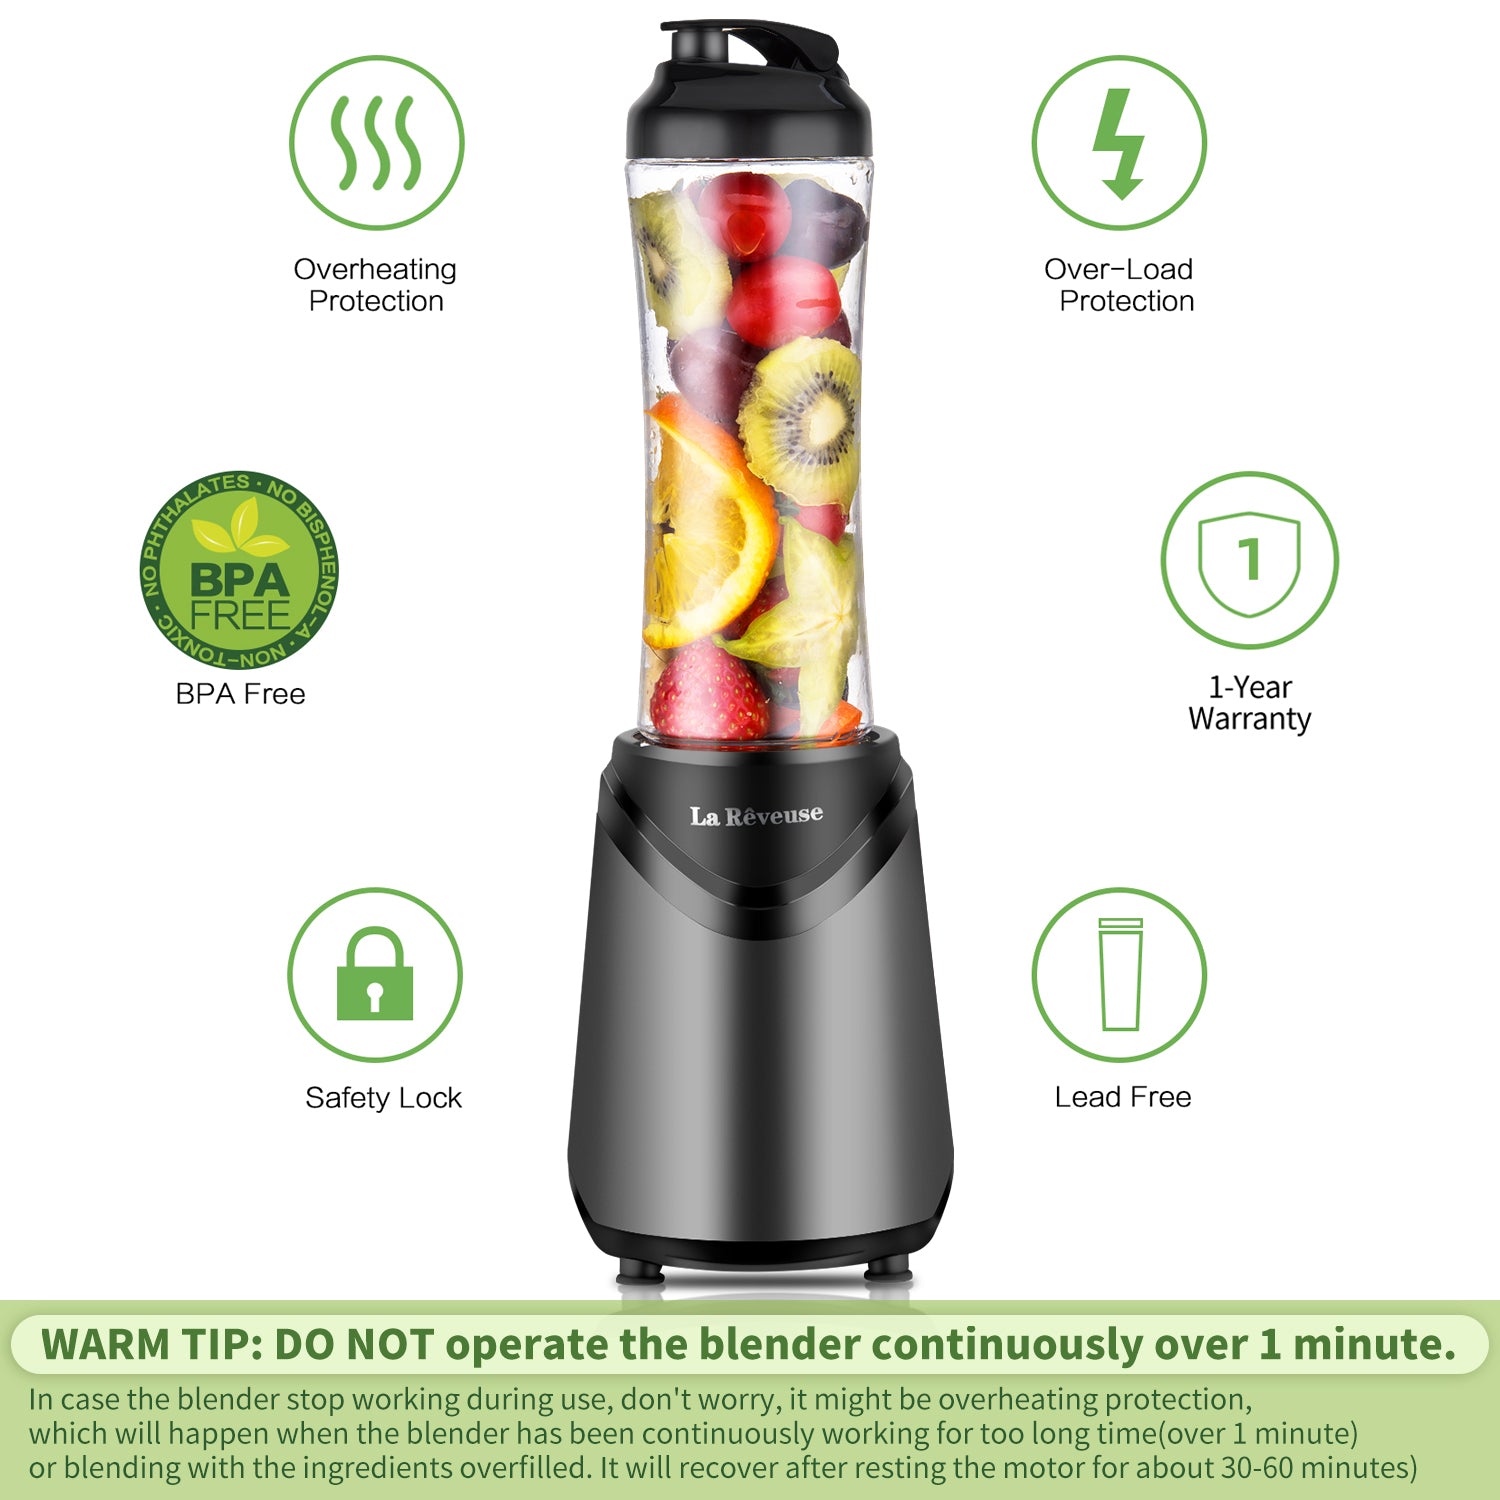 La Reveuse Smoothies Blender 300 Watt with 18 oz BPA Free Portable